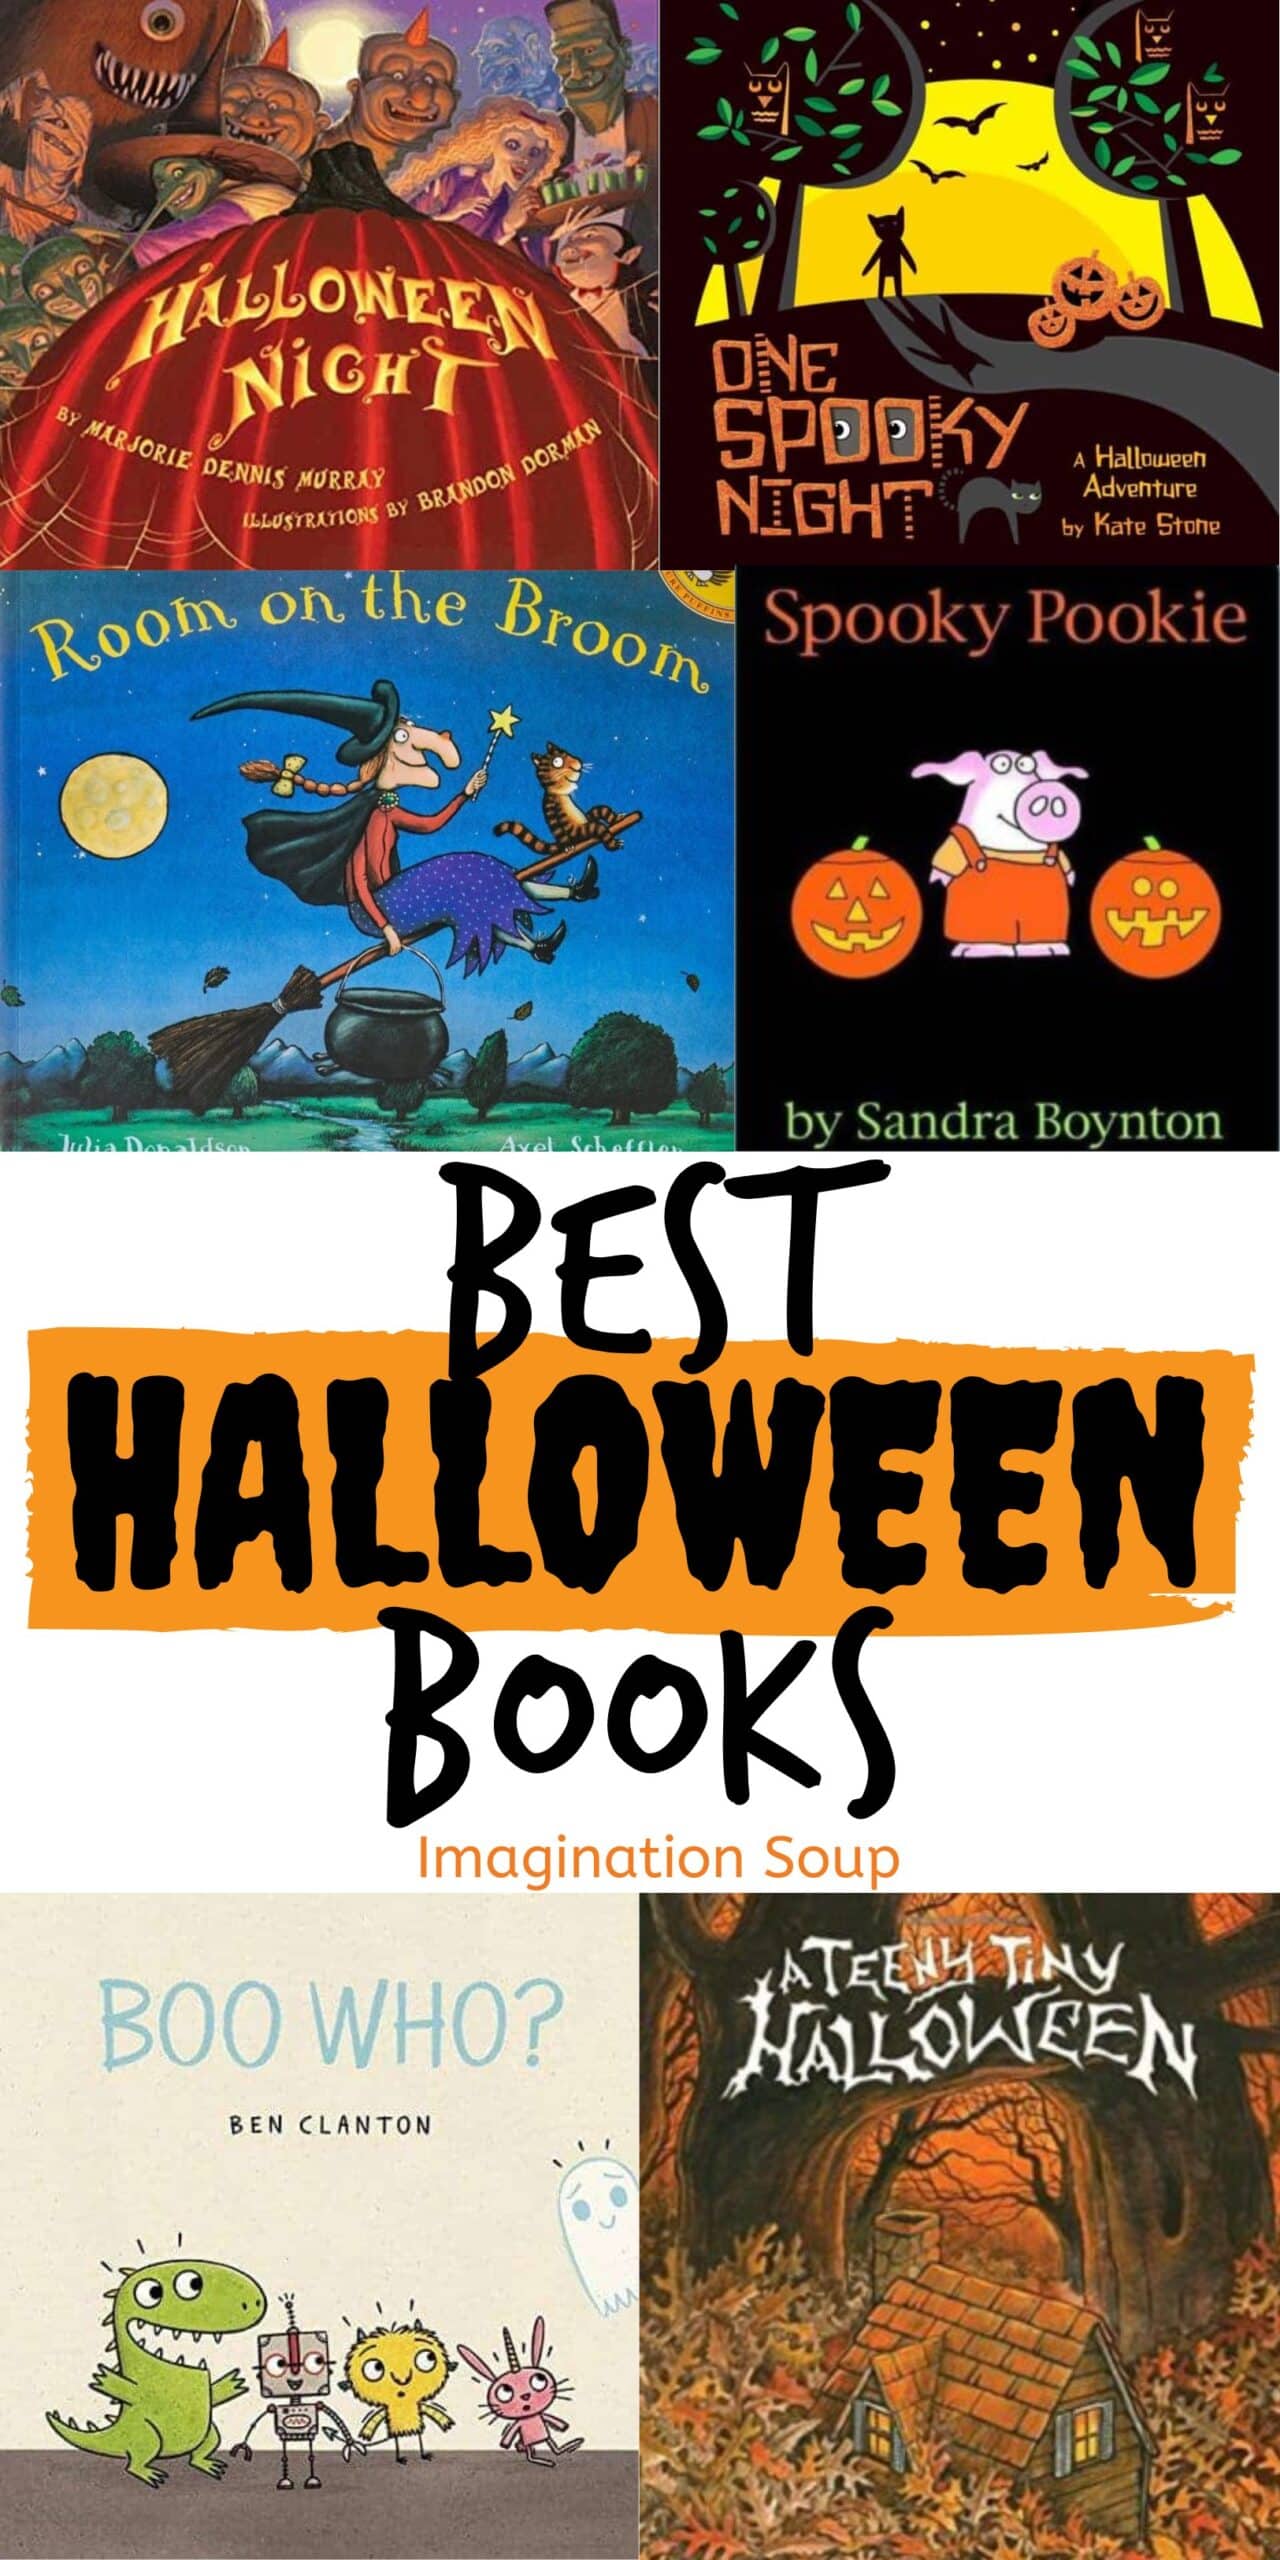 BEST Halloween Books for Kids